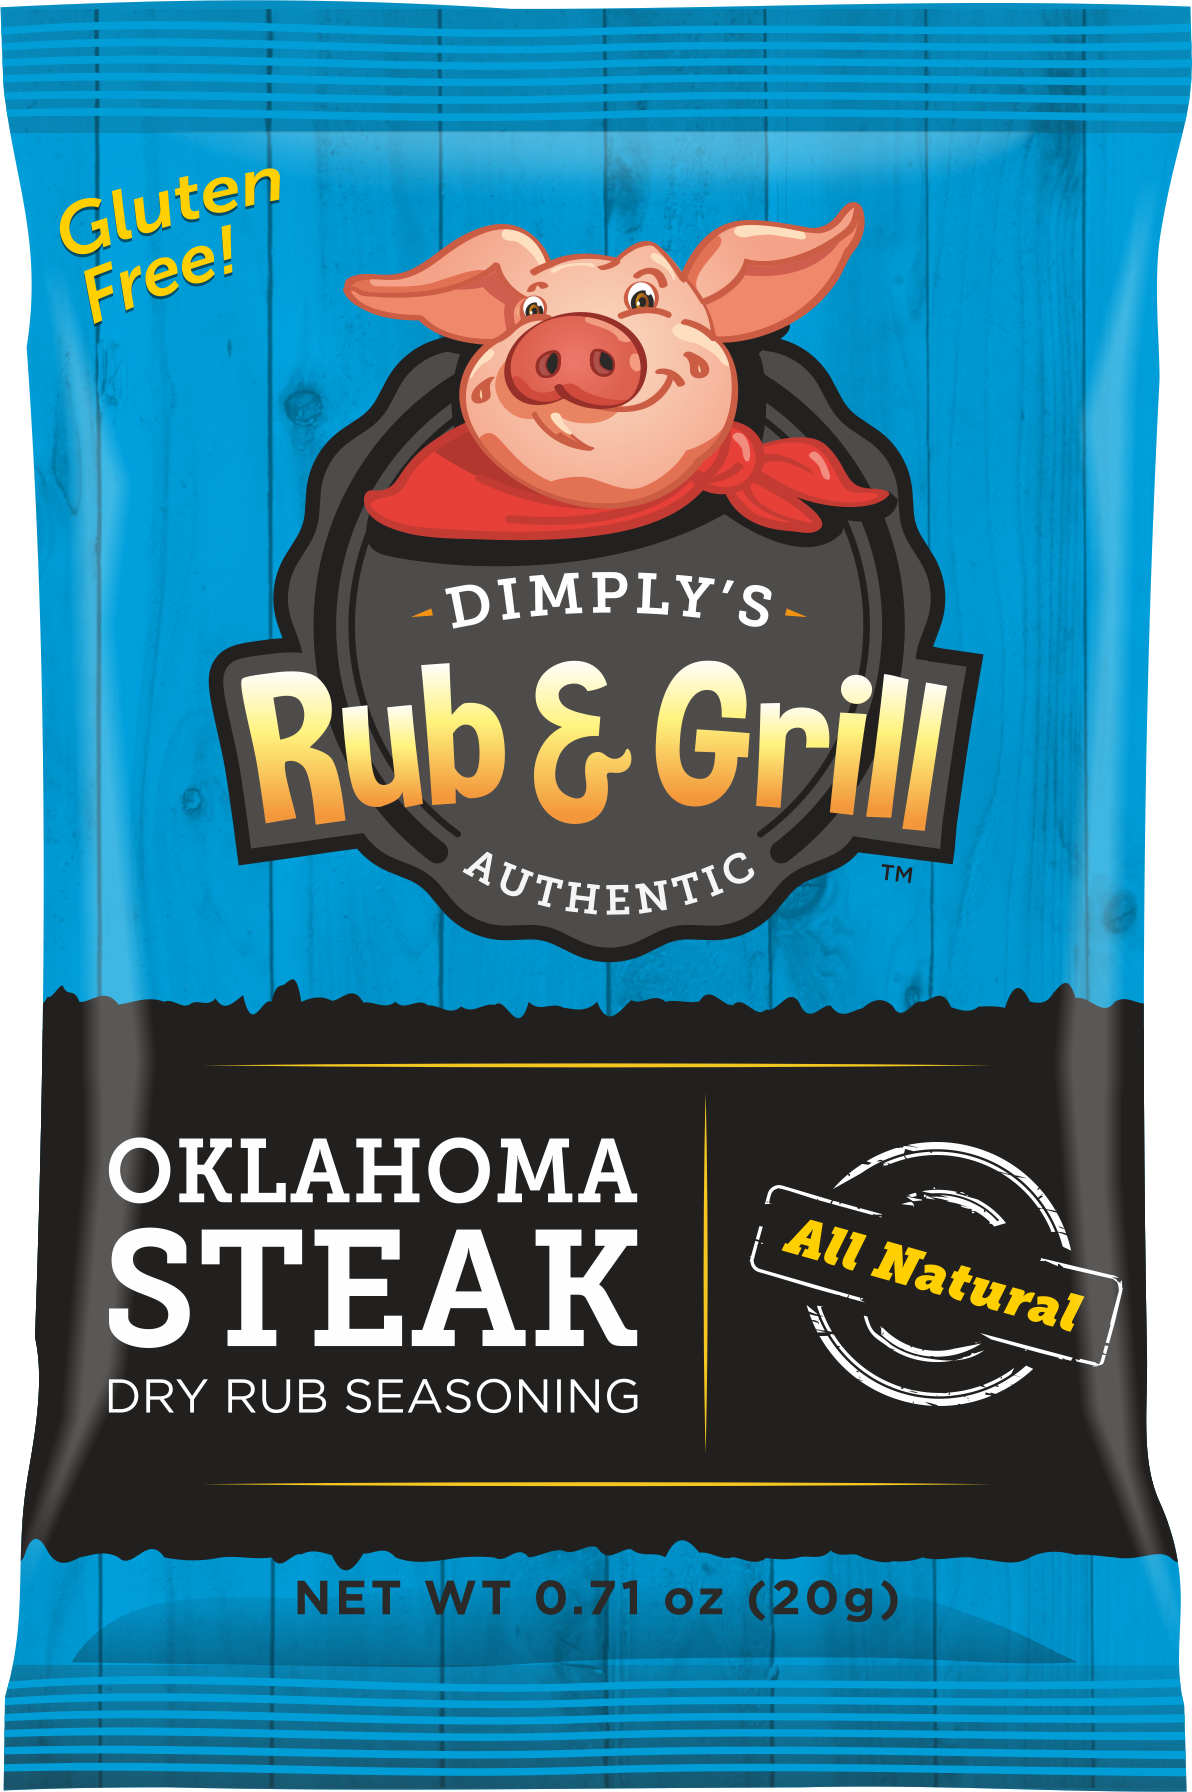 Oklahoma Steak Dry Rub Seasoning